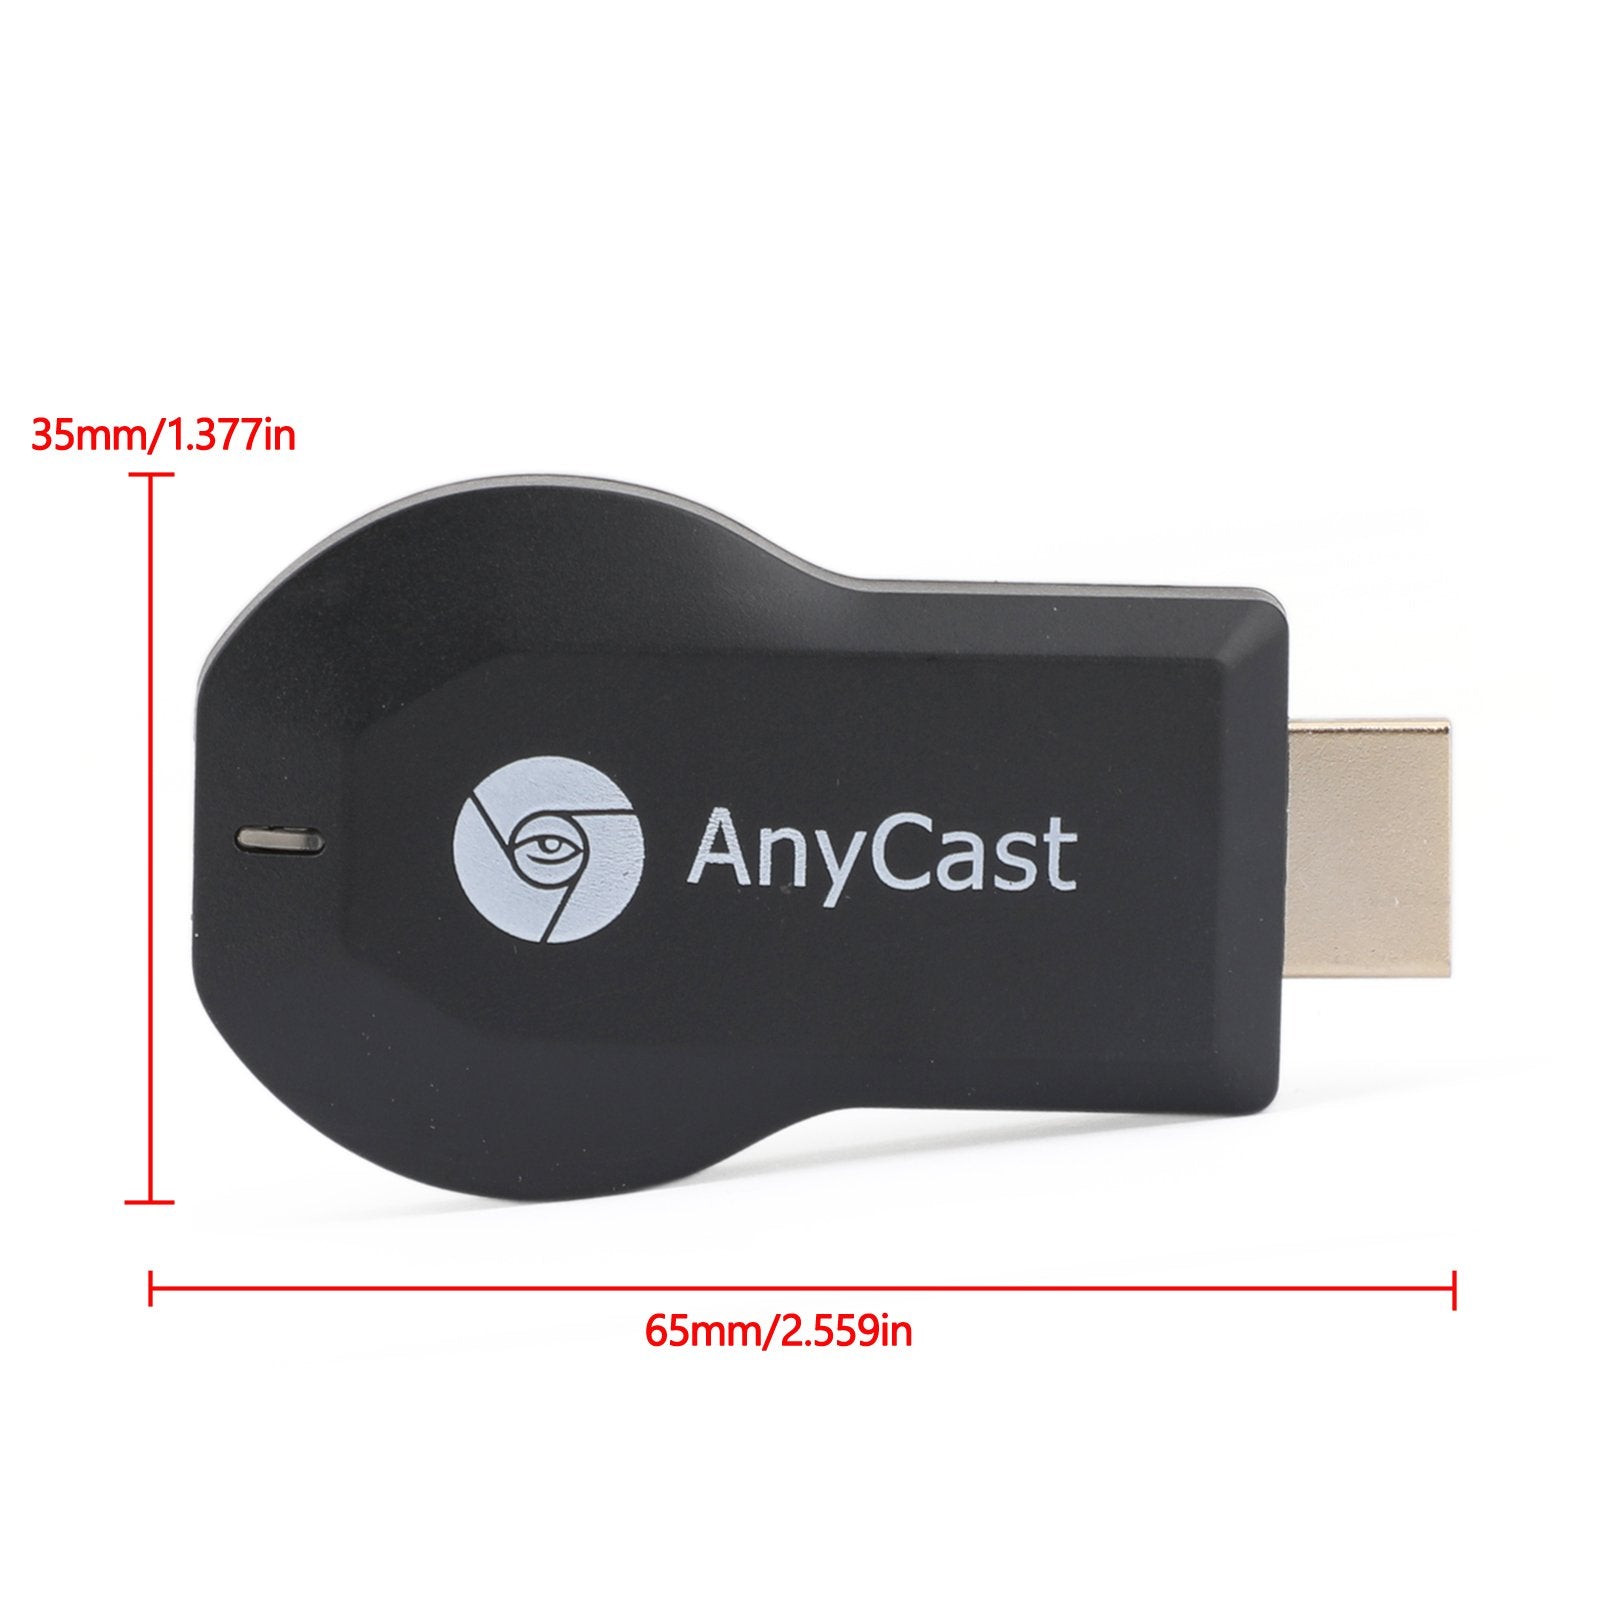 Receptor de pantalla Dongle Streamer Anycast 4K M4+ Air Play HDMI TV Stick WIFI